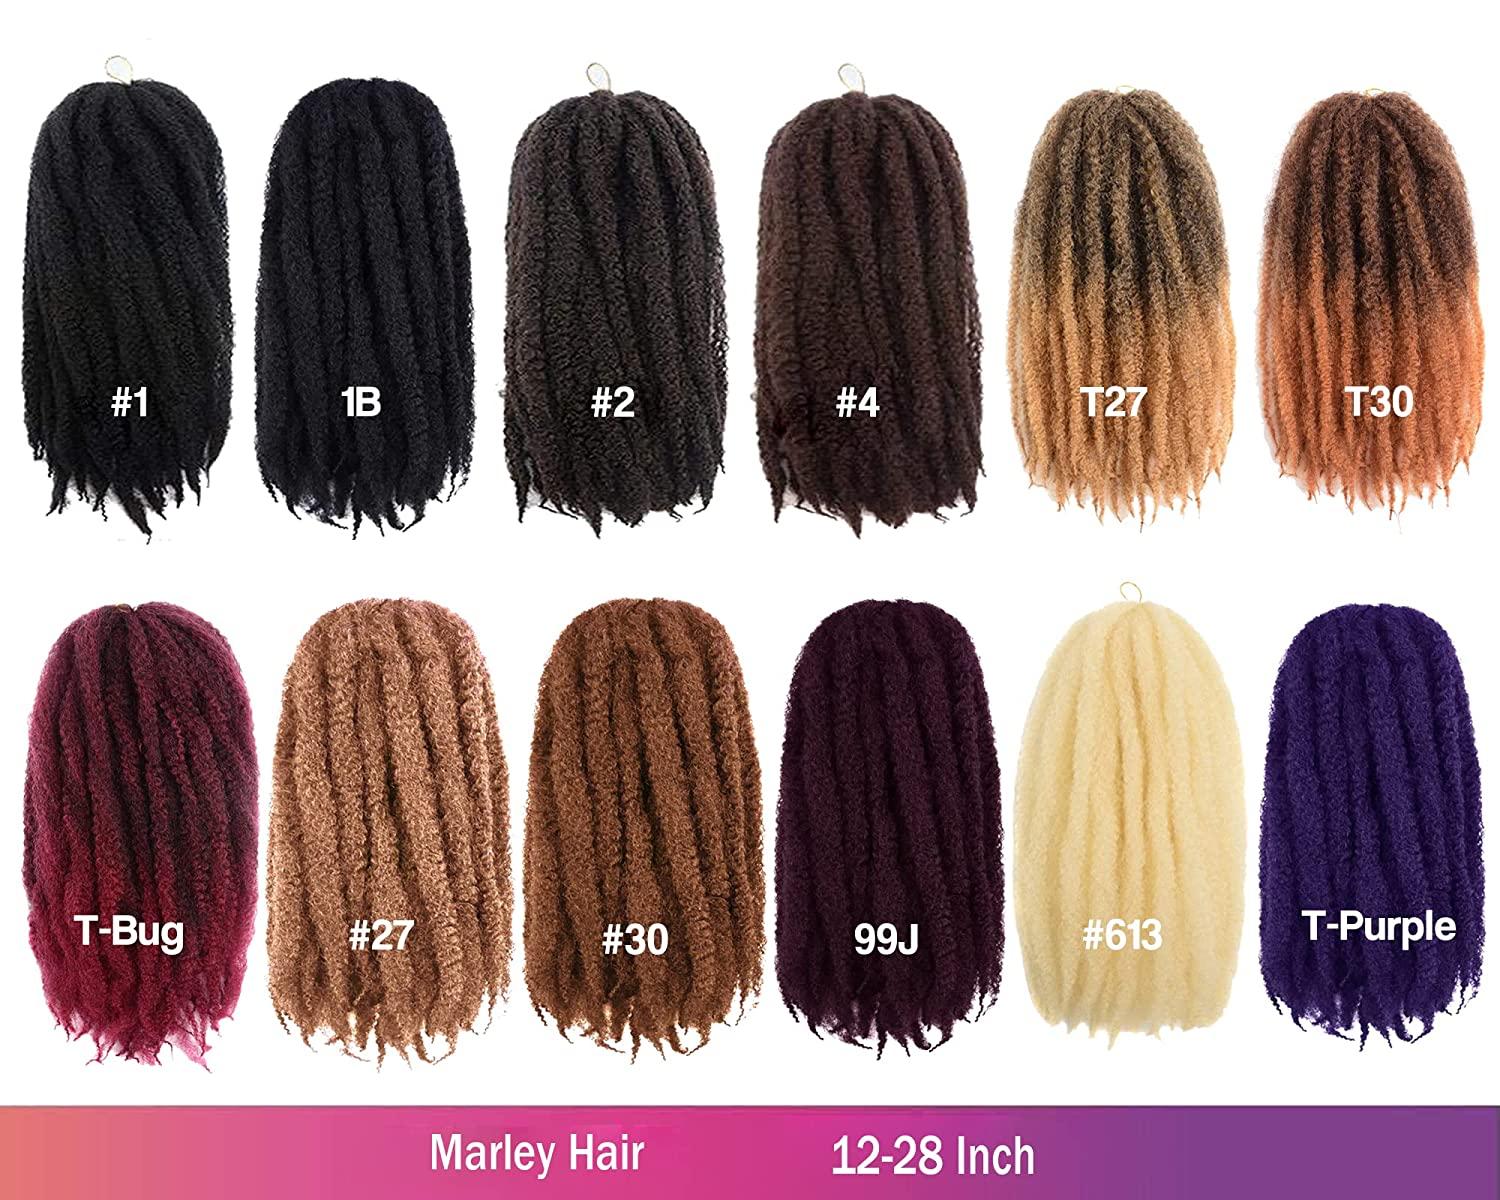 ToyoTress Marley Hair Crochet Braids - 14 Inch 6 Packs 1B Natural